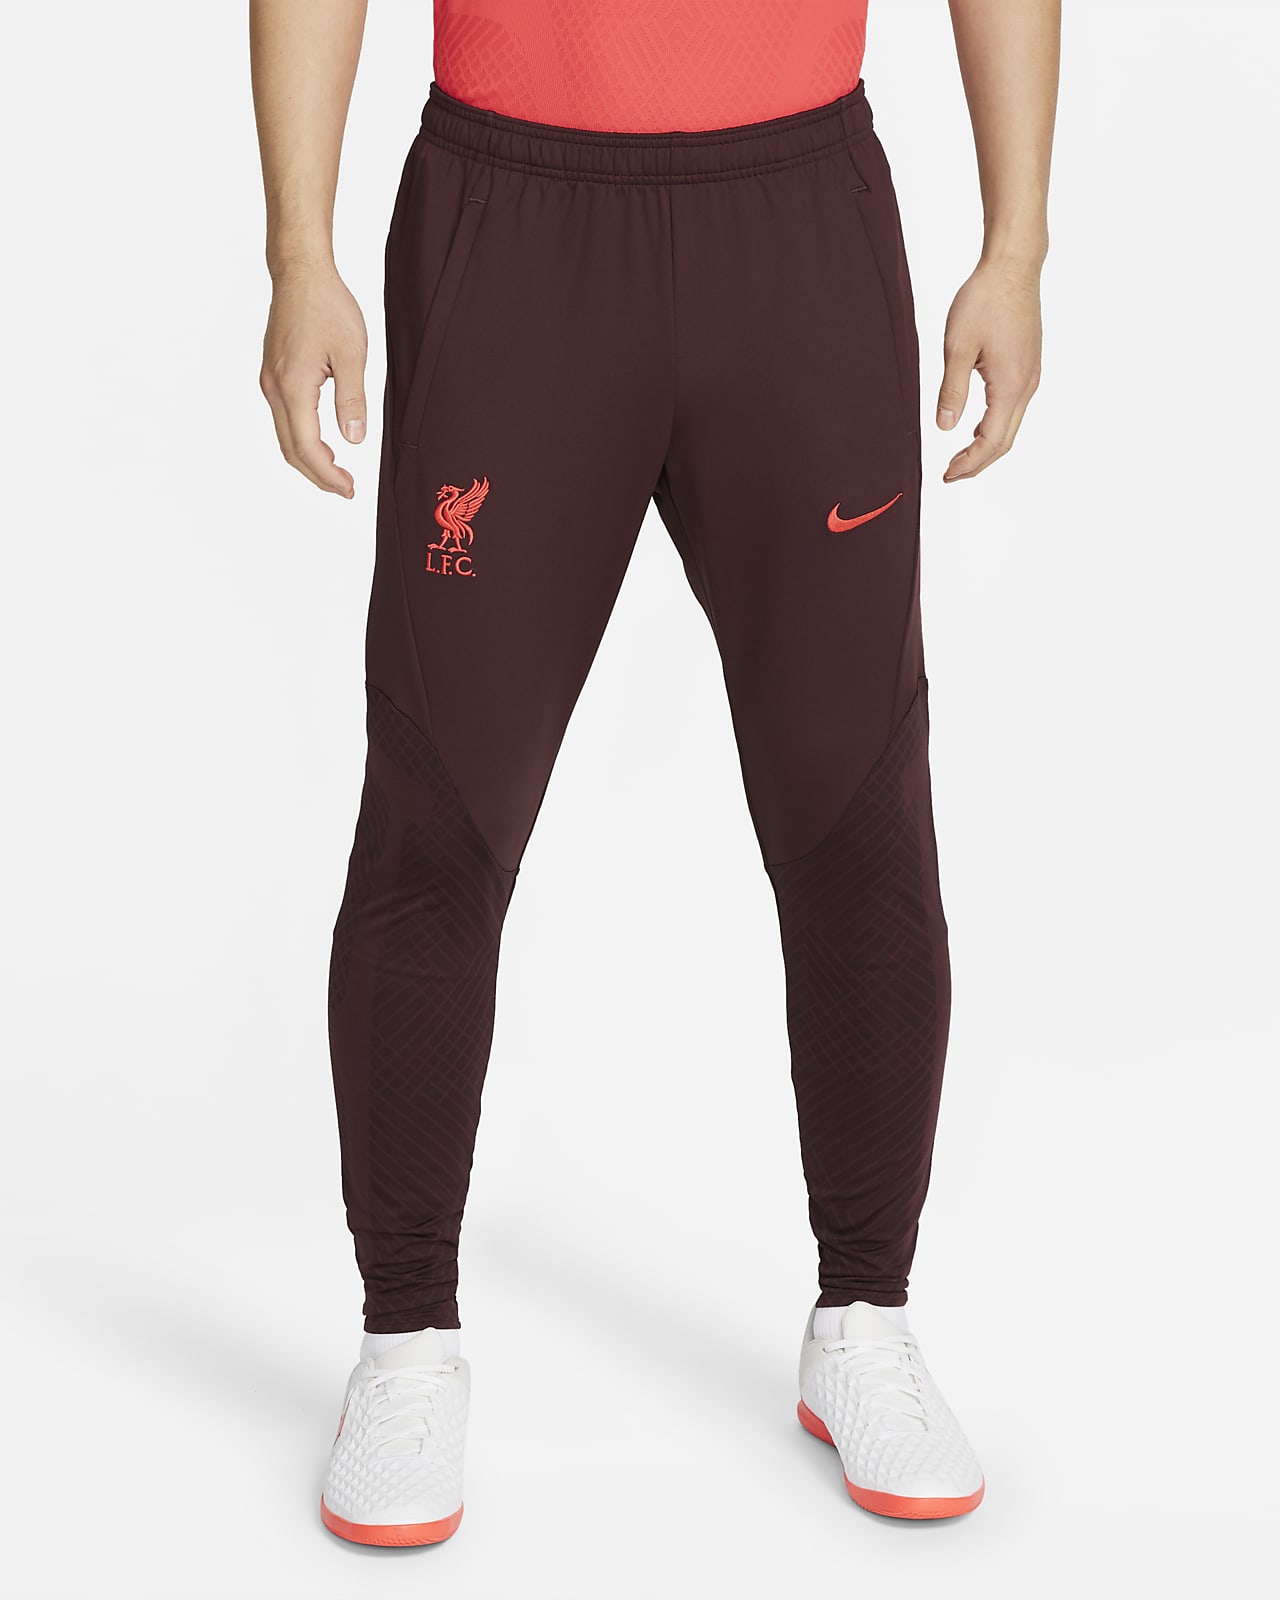 Pantalones de Nike Dri-FIT para Liverpool Nike.com